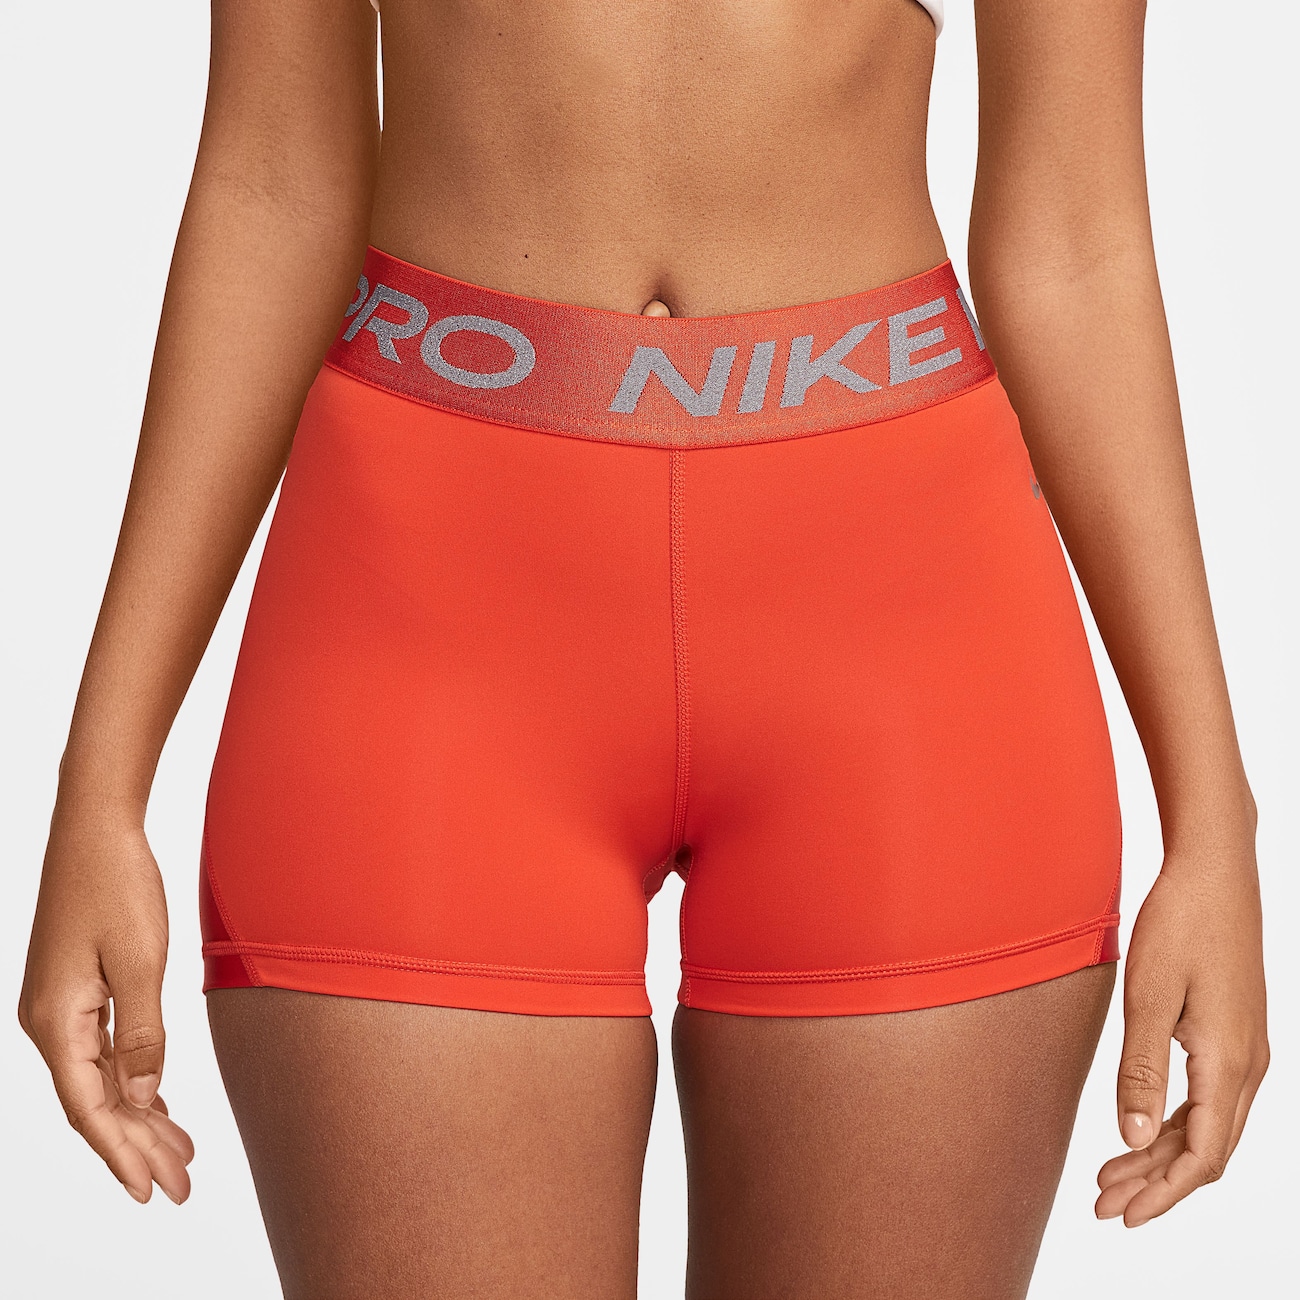 Shorts Nike Pro Feminino